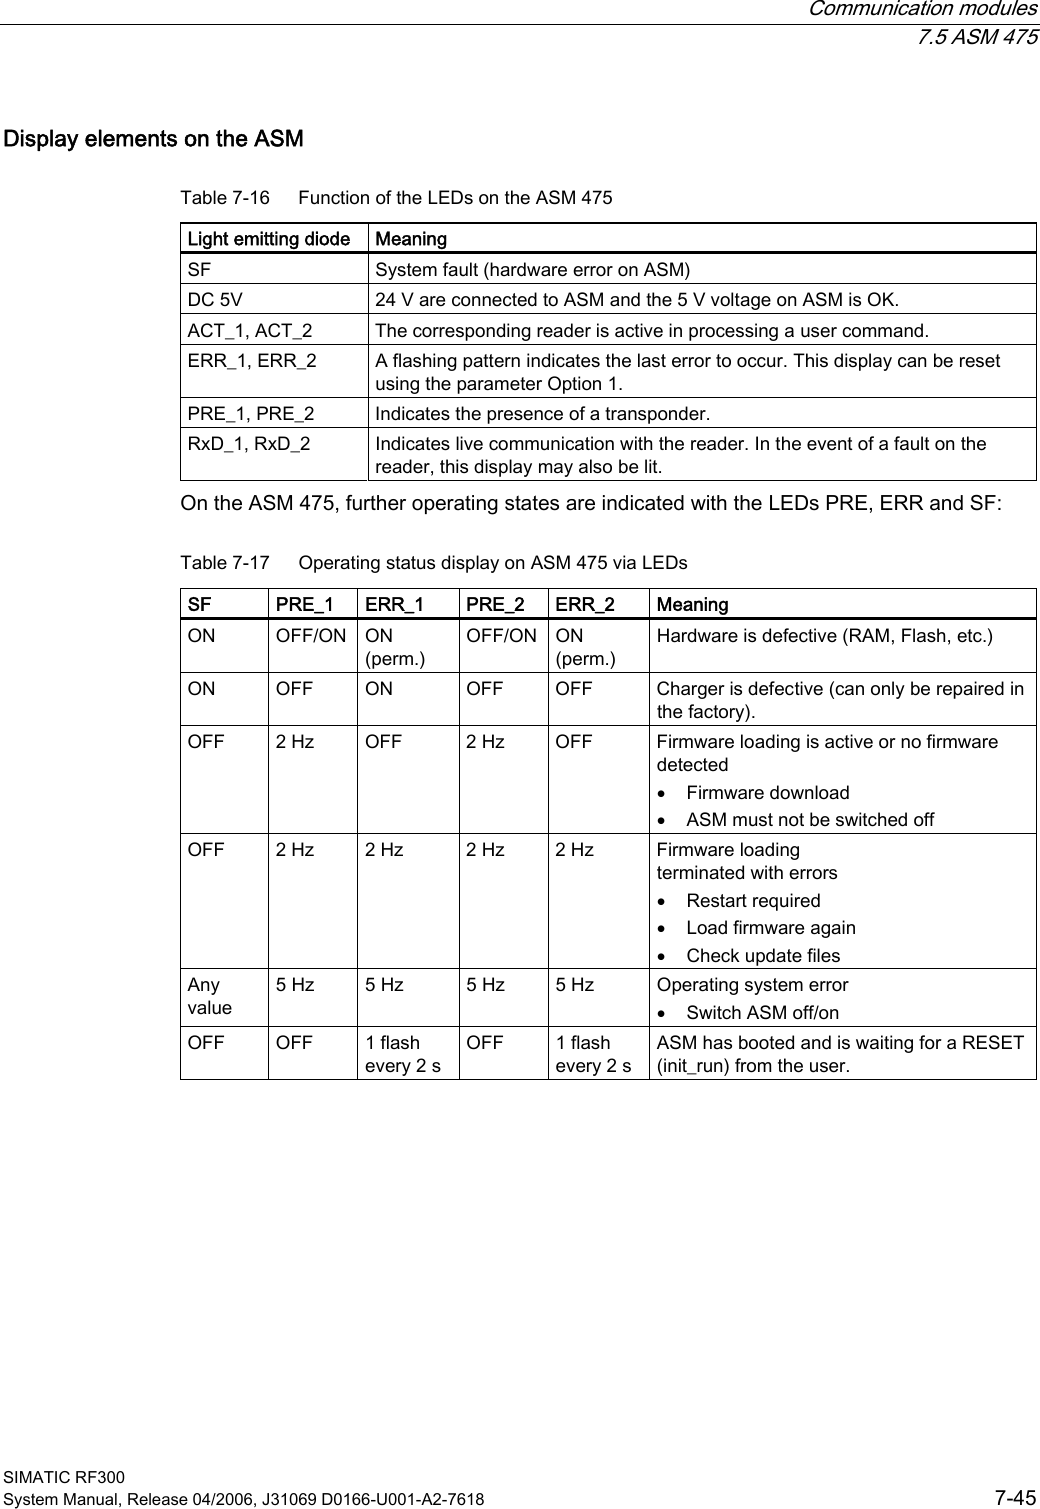 Siemens s7-300 manual pdf